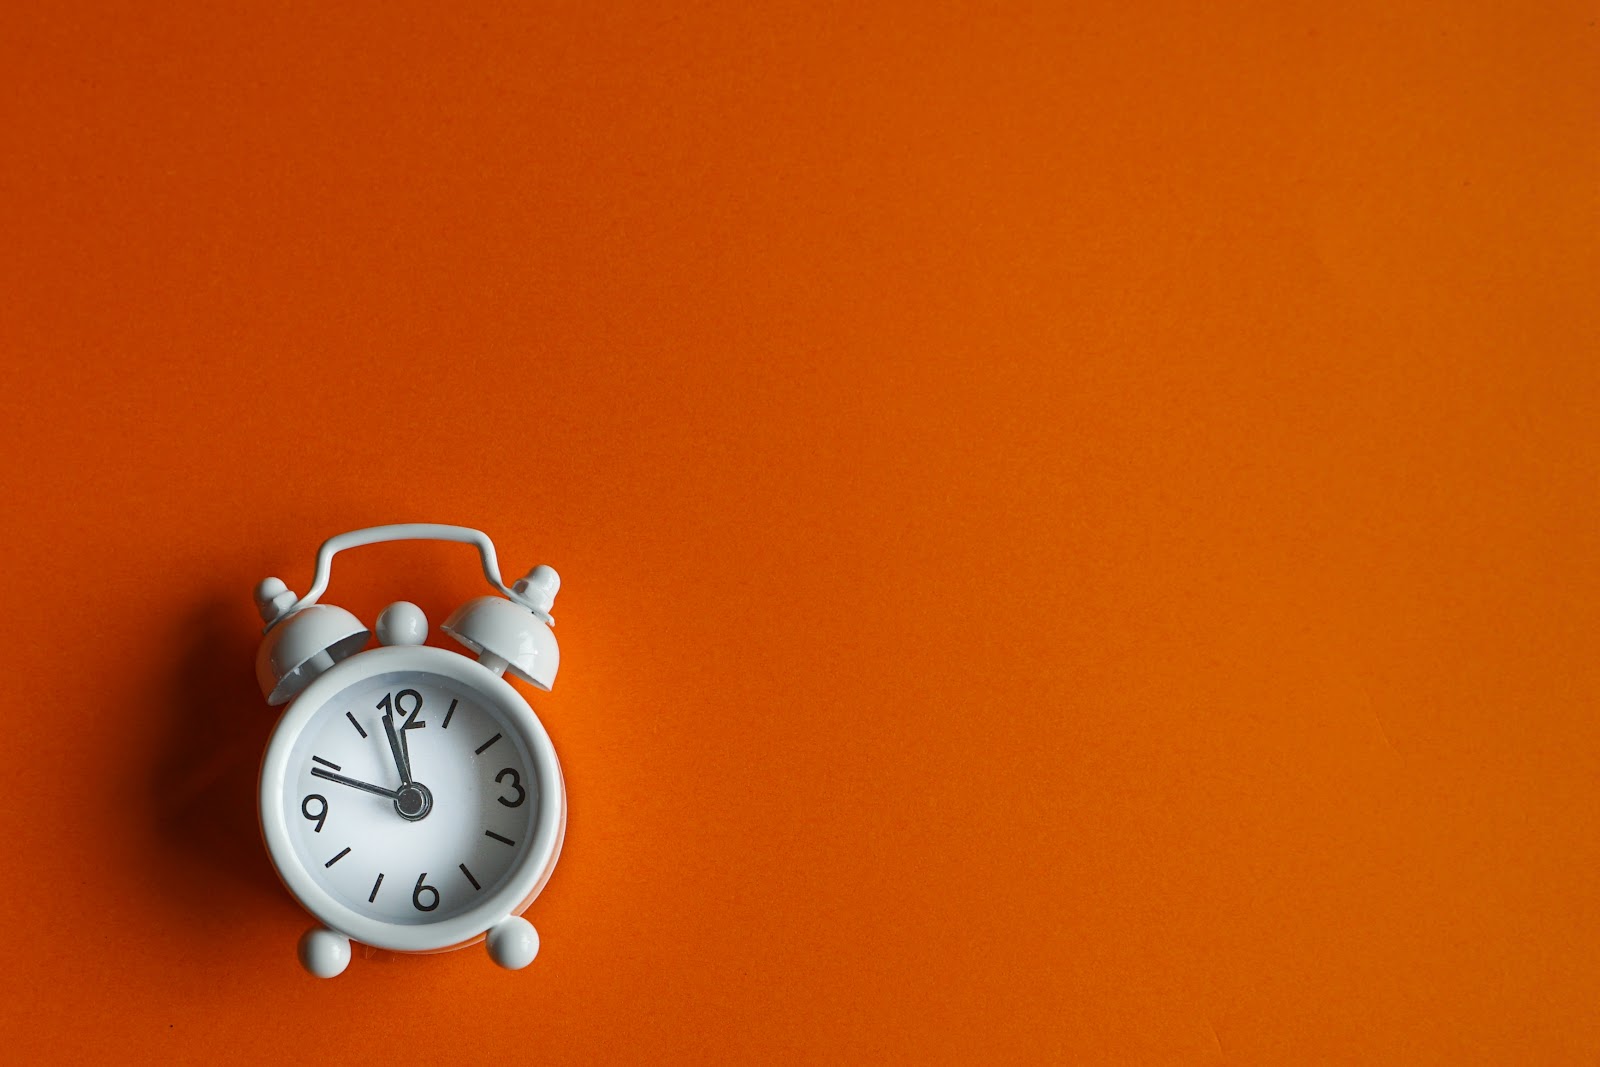 An alarm clock appears on an orange background. 